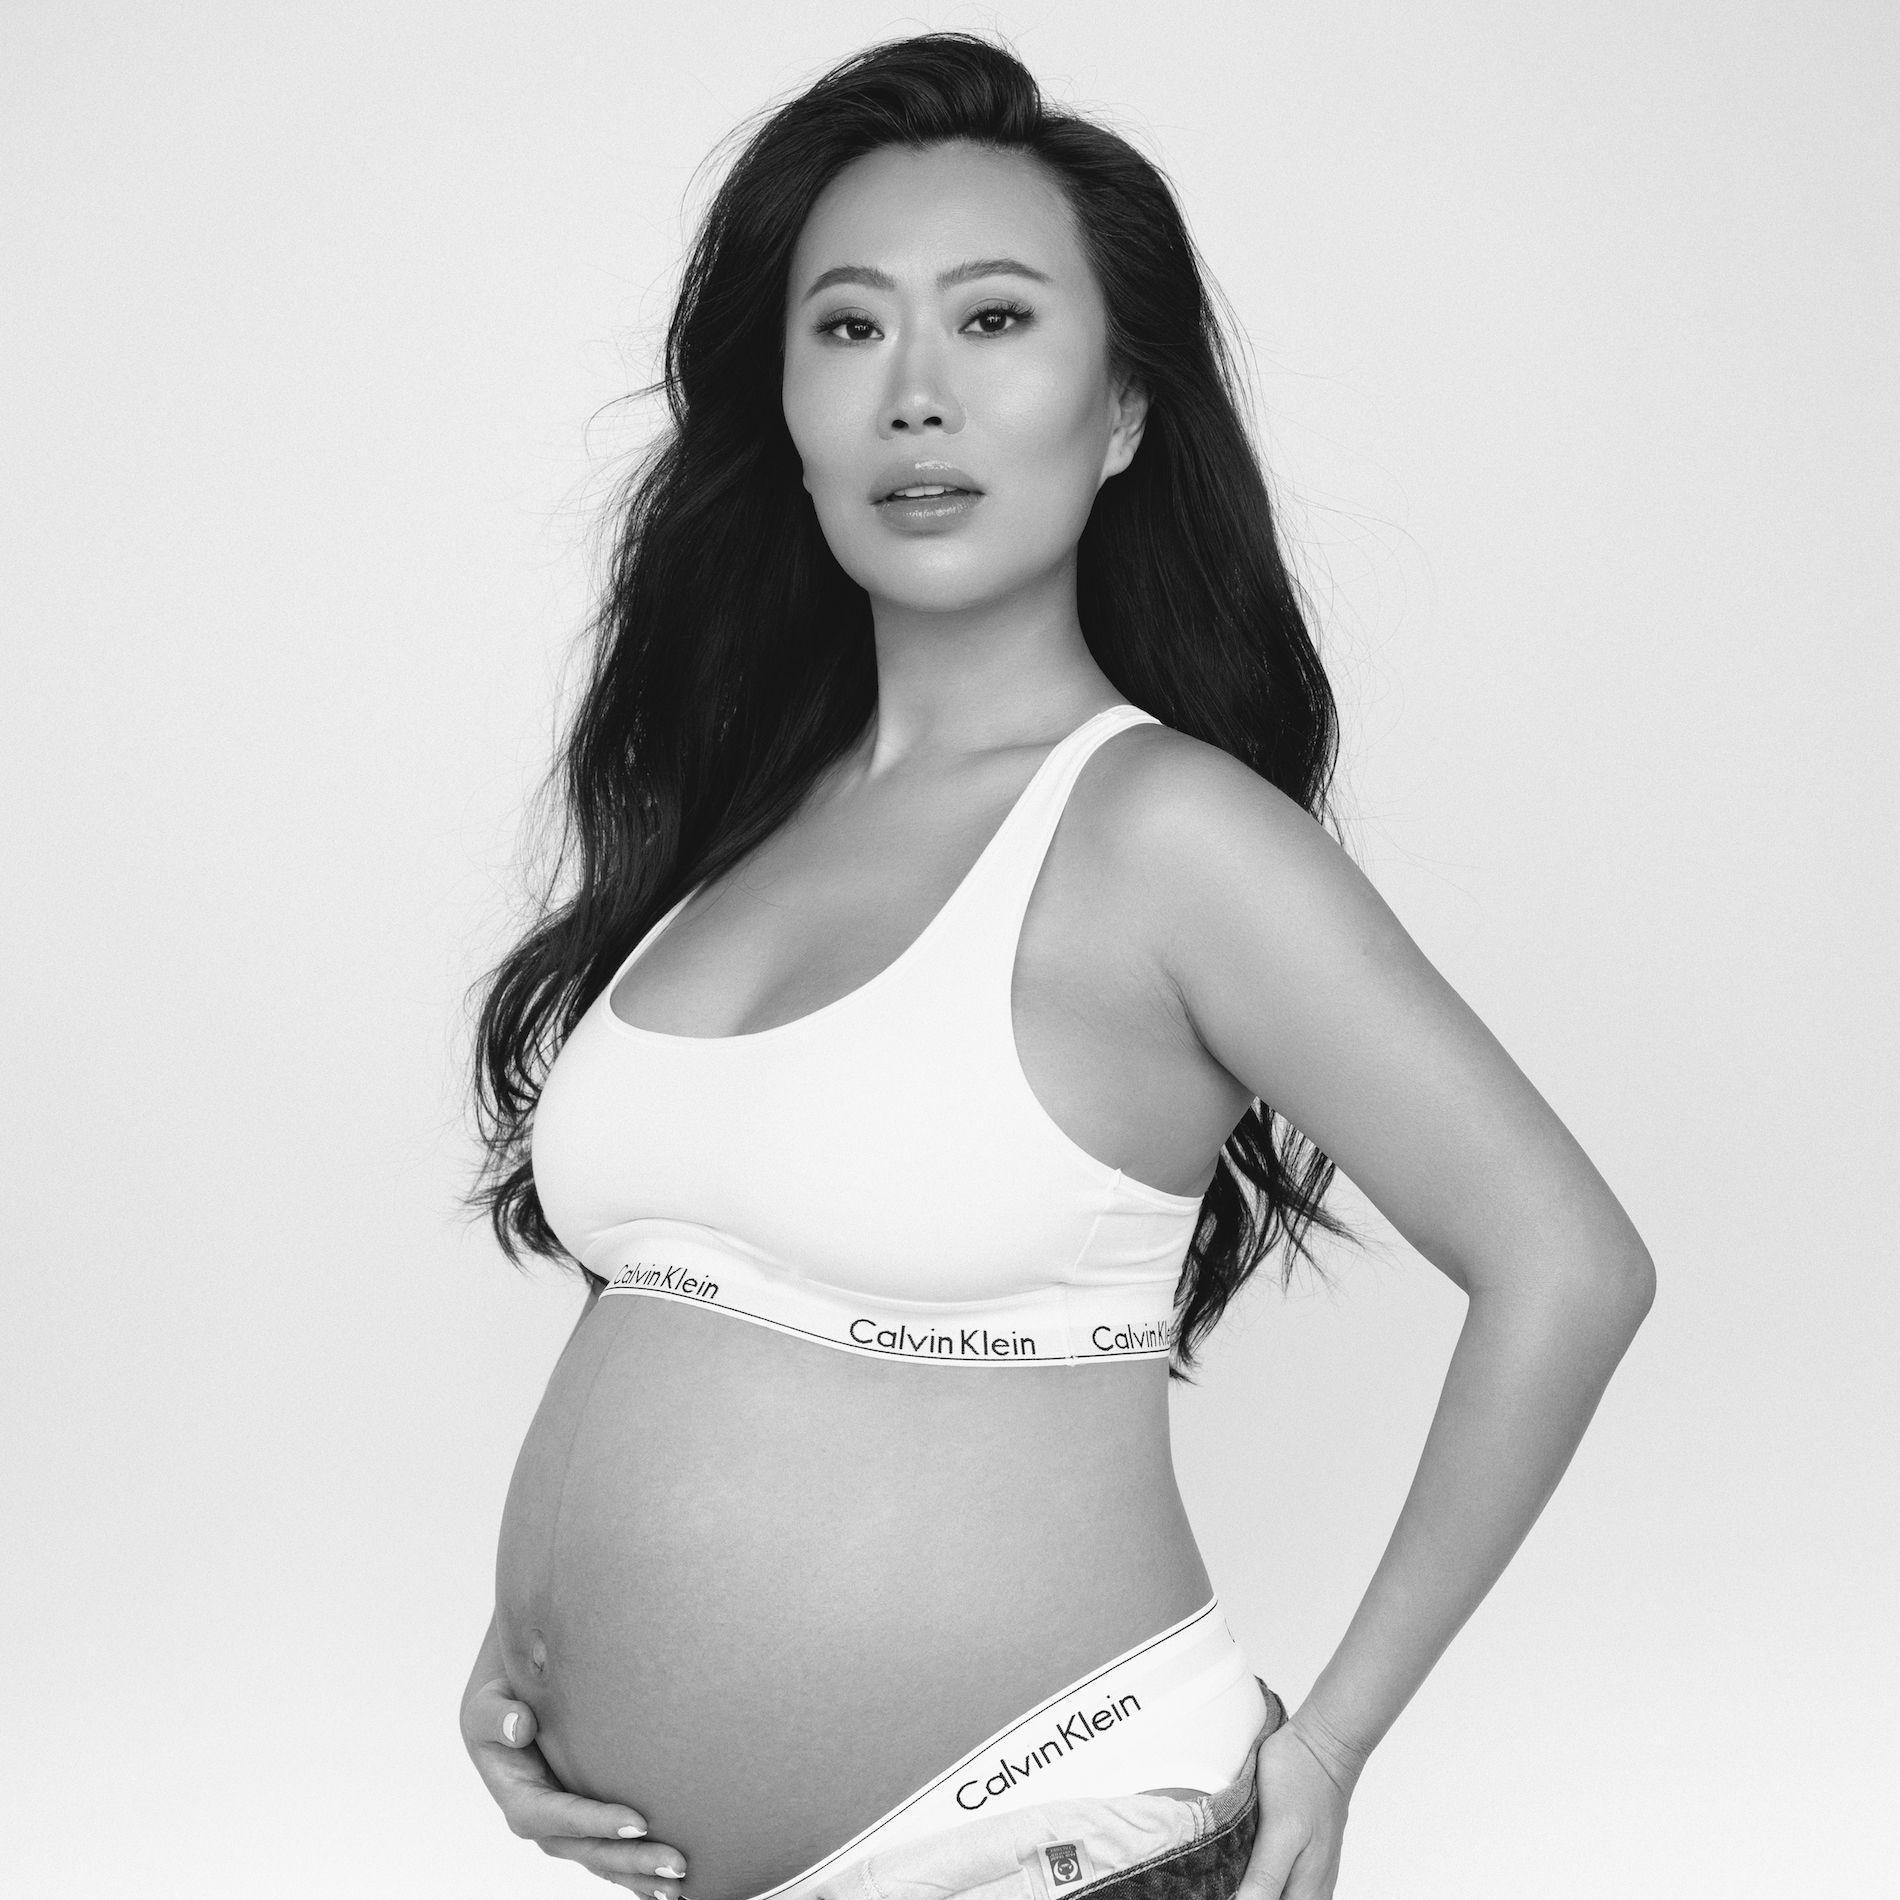 Bling Empire's Kelly Mi Li unveils stunning maternity photos in